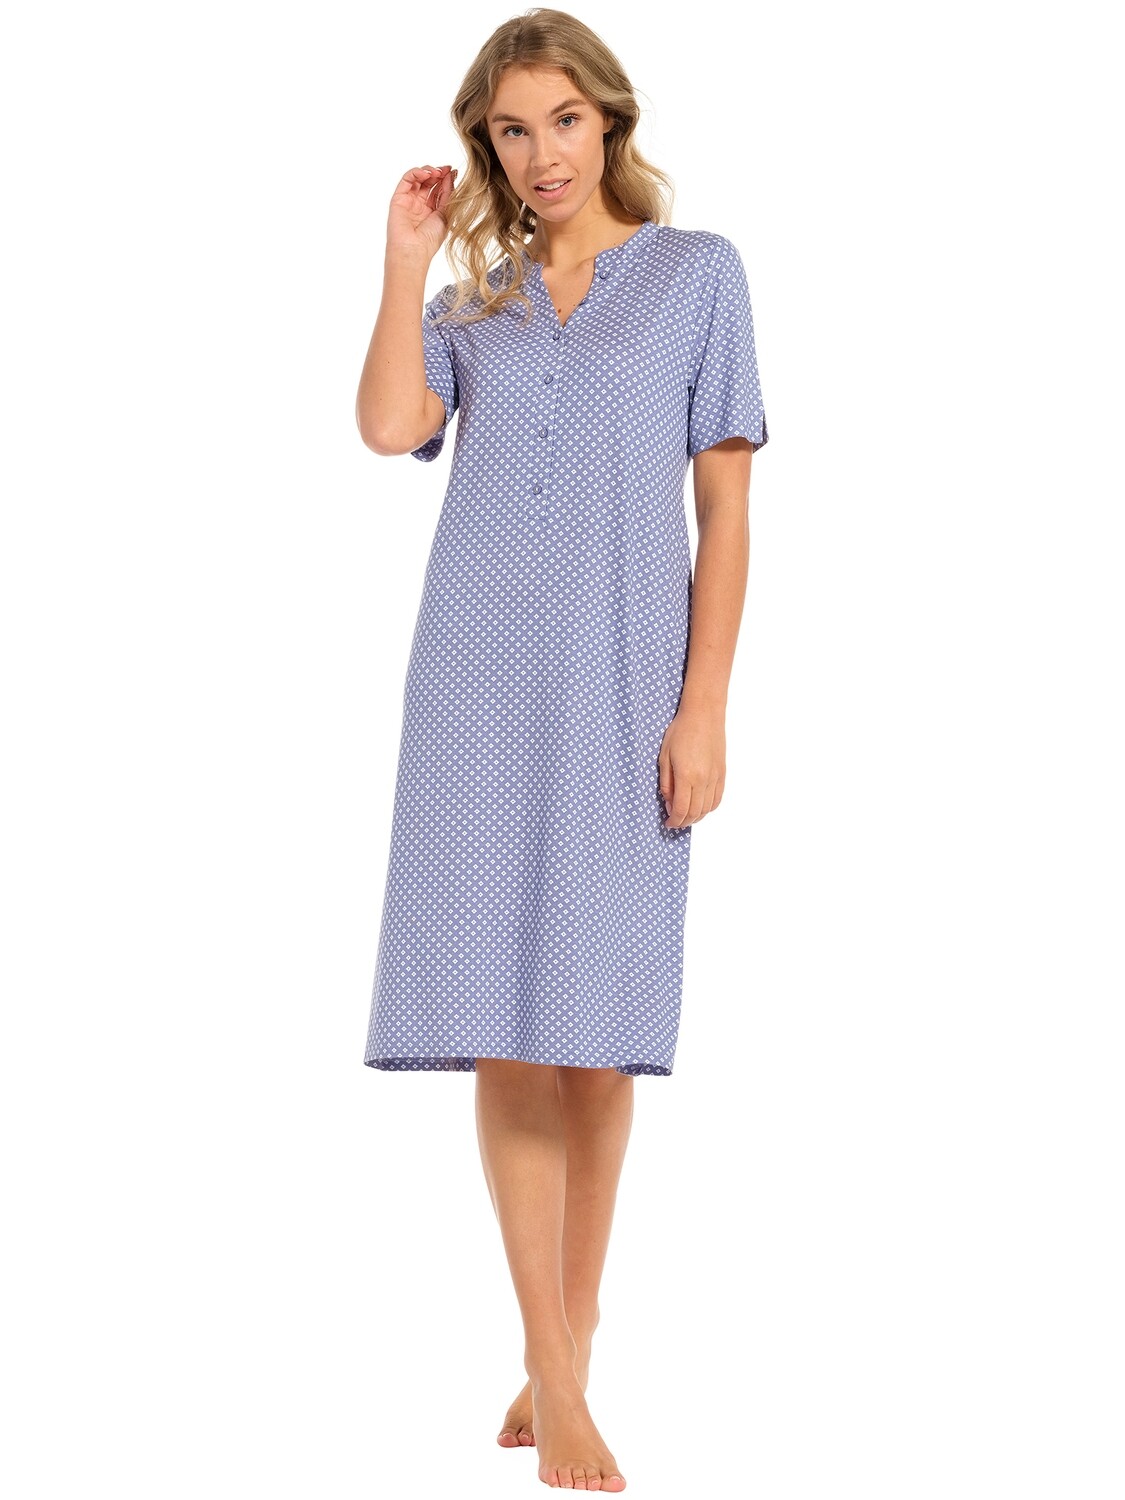 Pastunette nachthemd 15241-310-4 Blauw combinatie